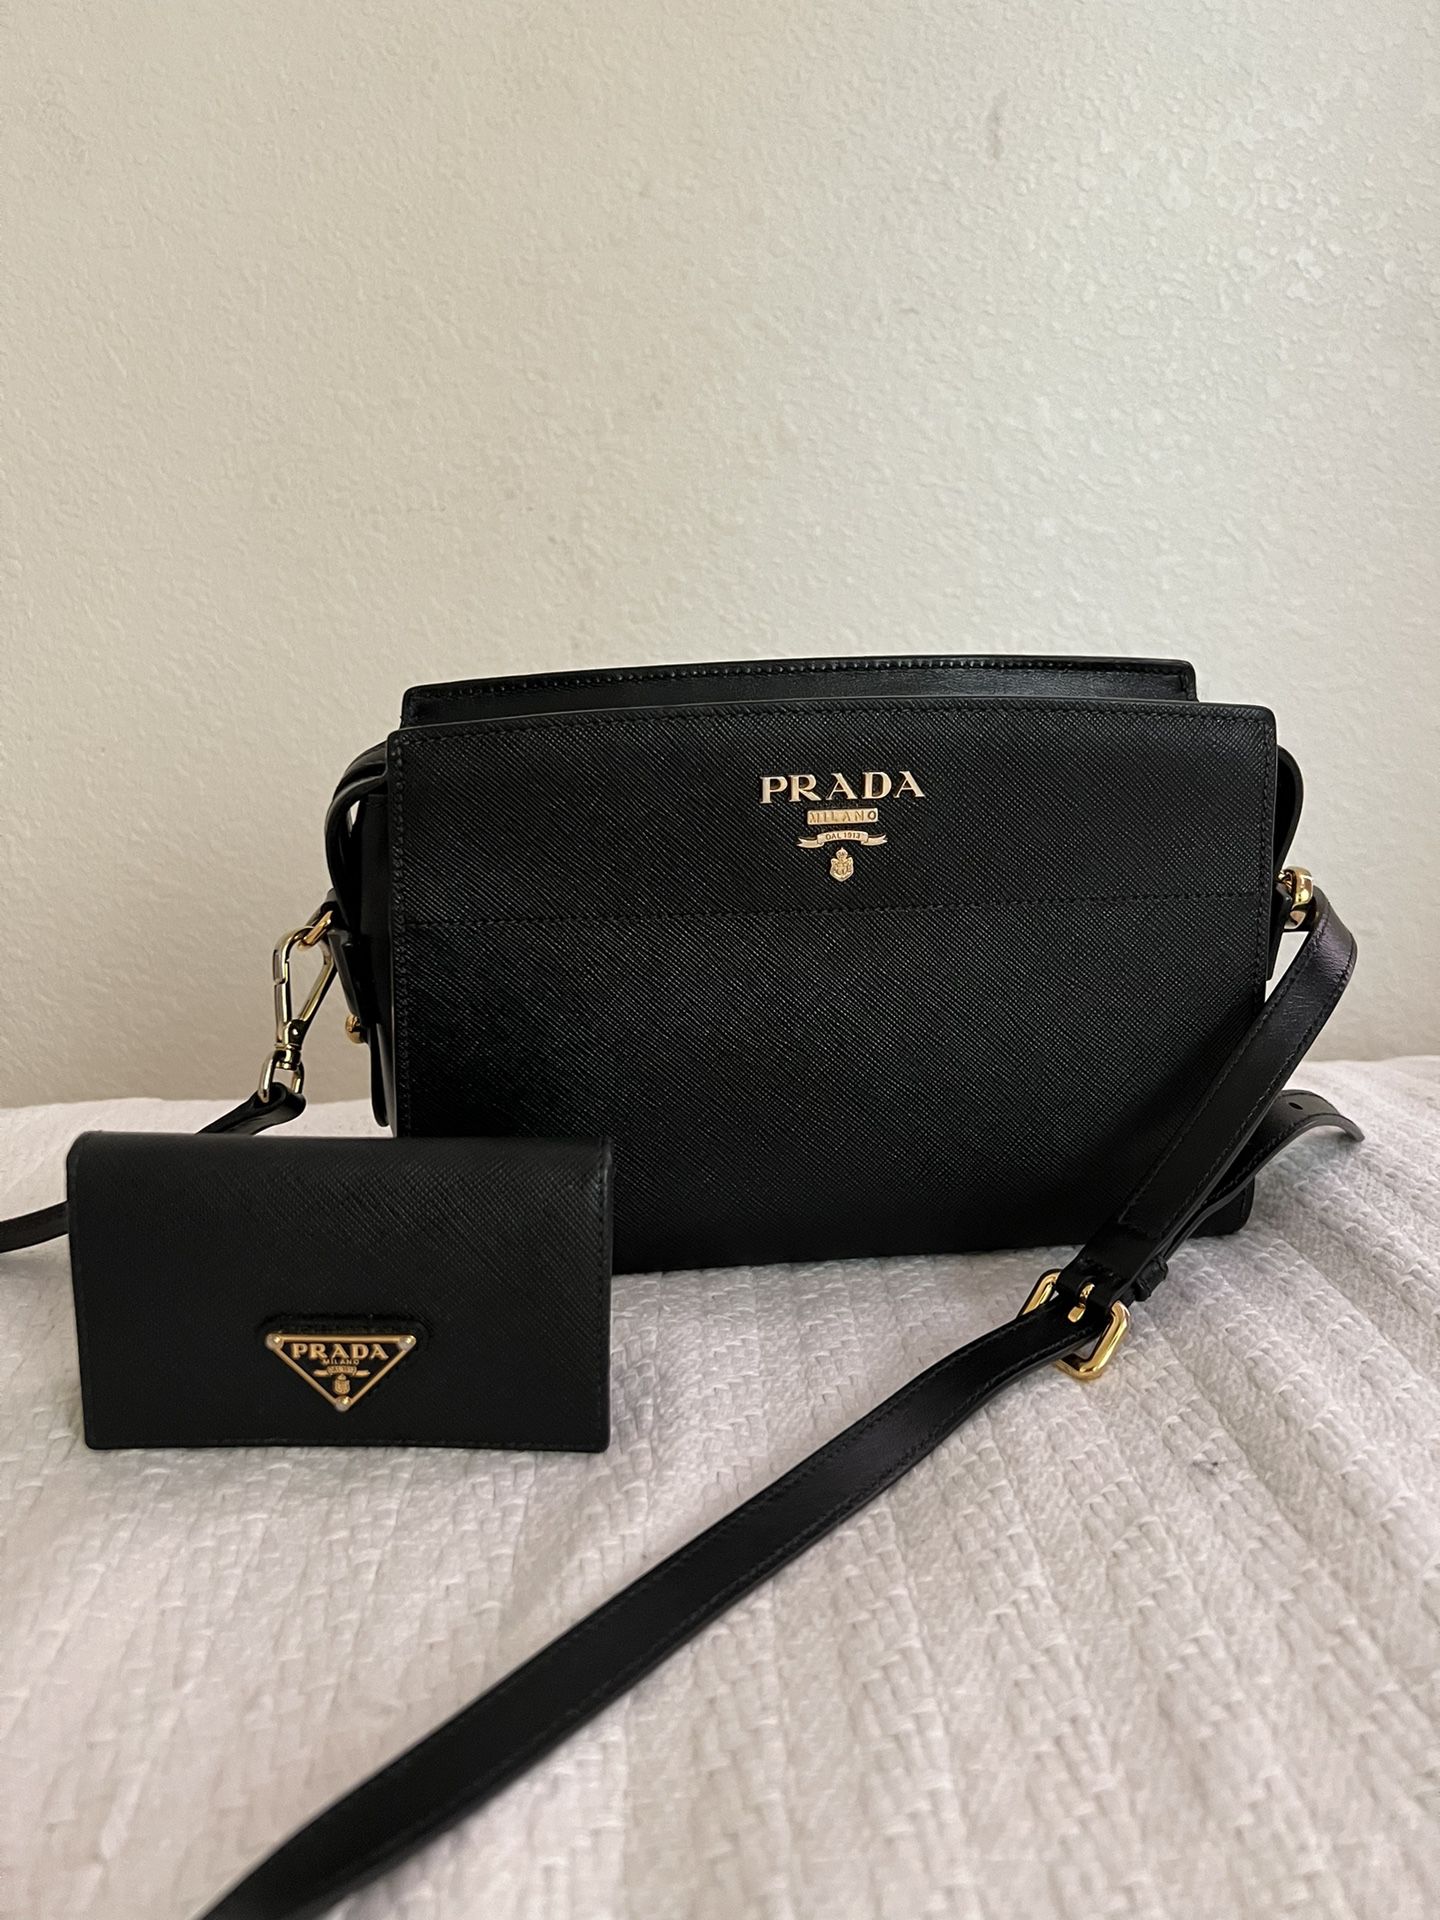 Prada bag for Sale in Las Vegas, NV - OfferUp